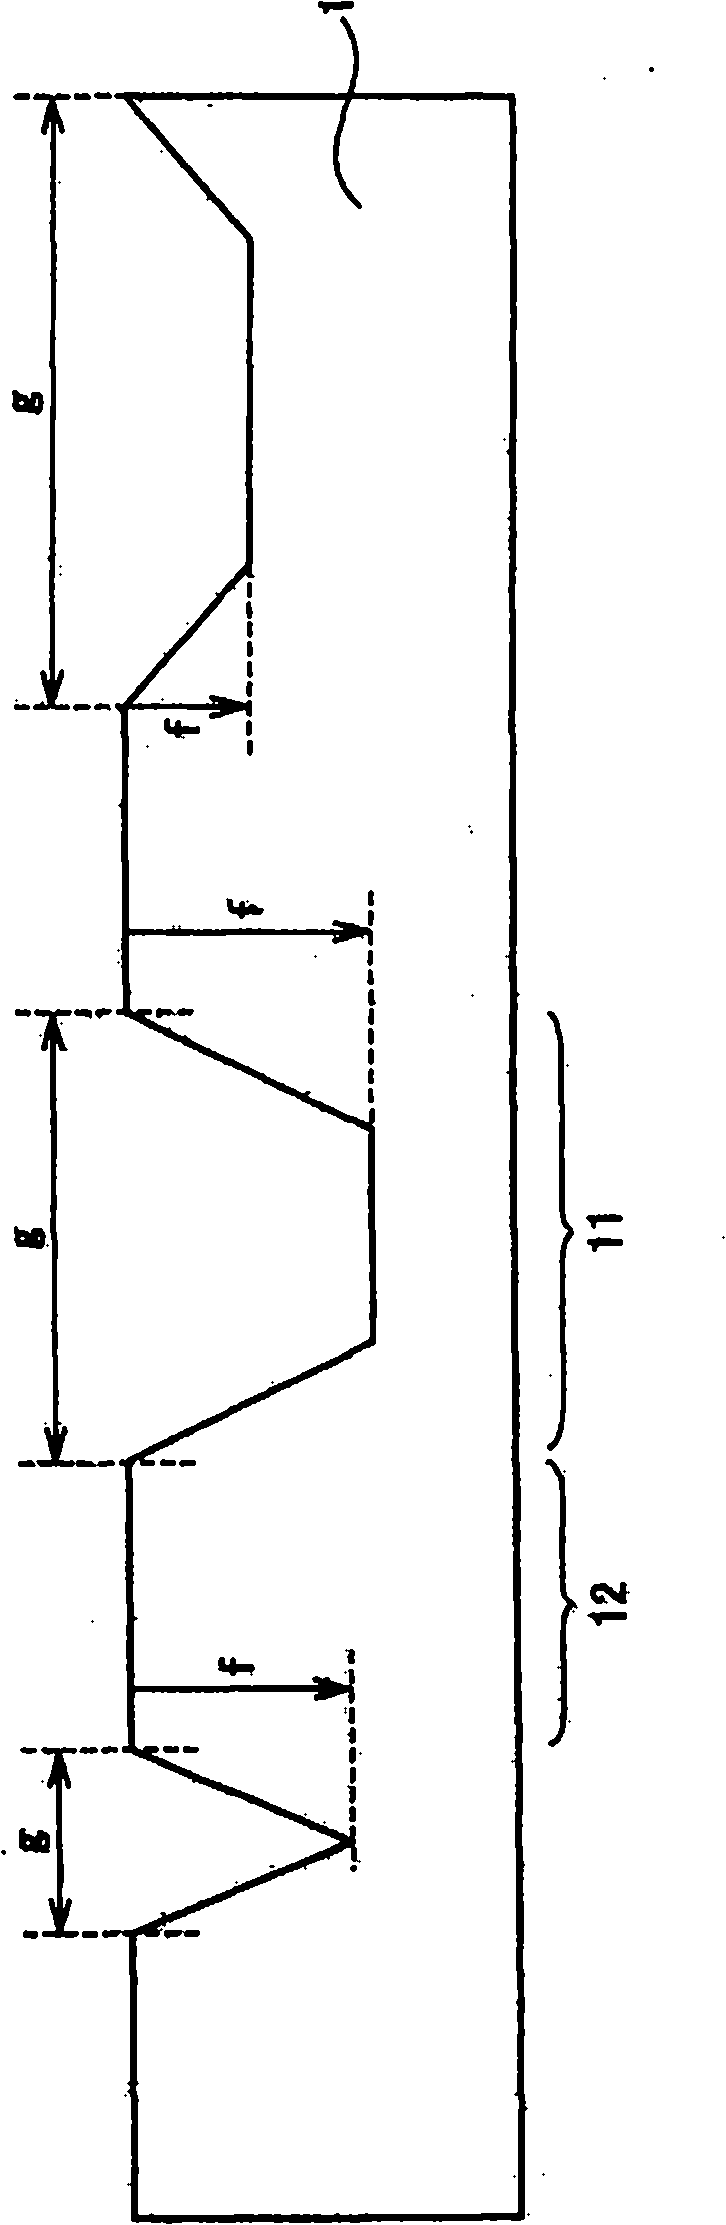 Method for fabricating nitride semiconductor light-emitting device